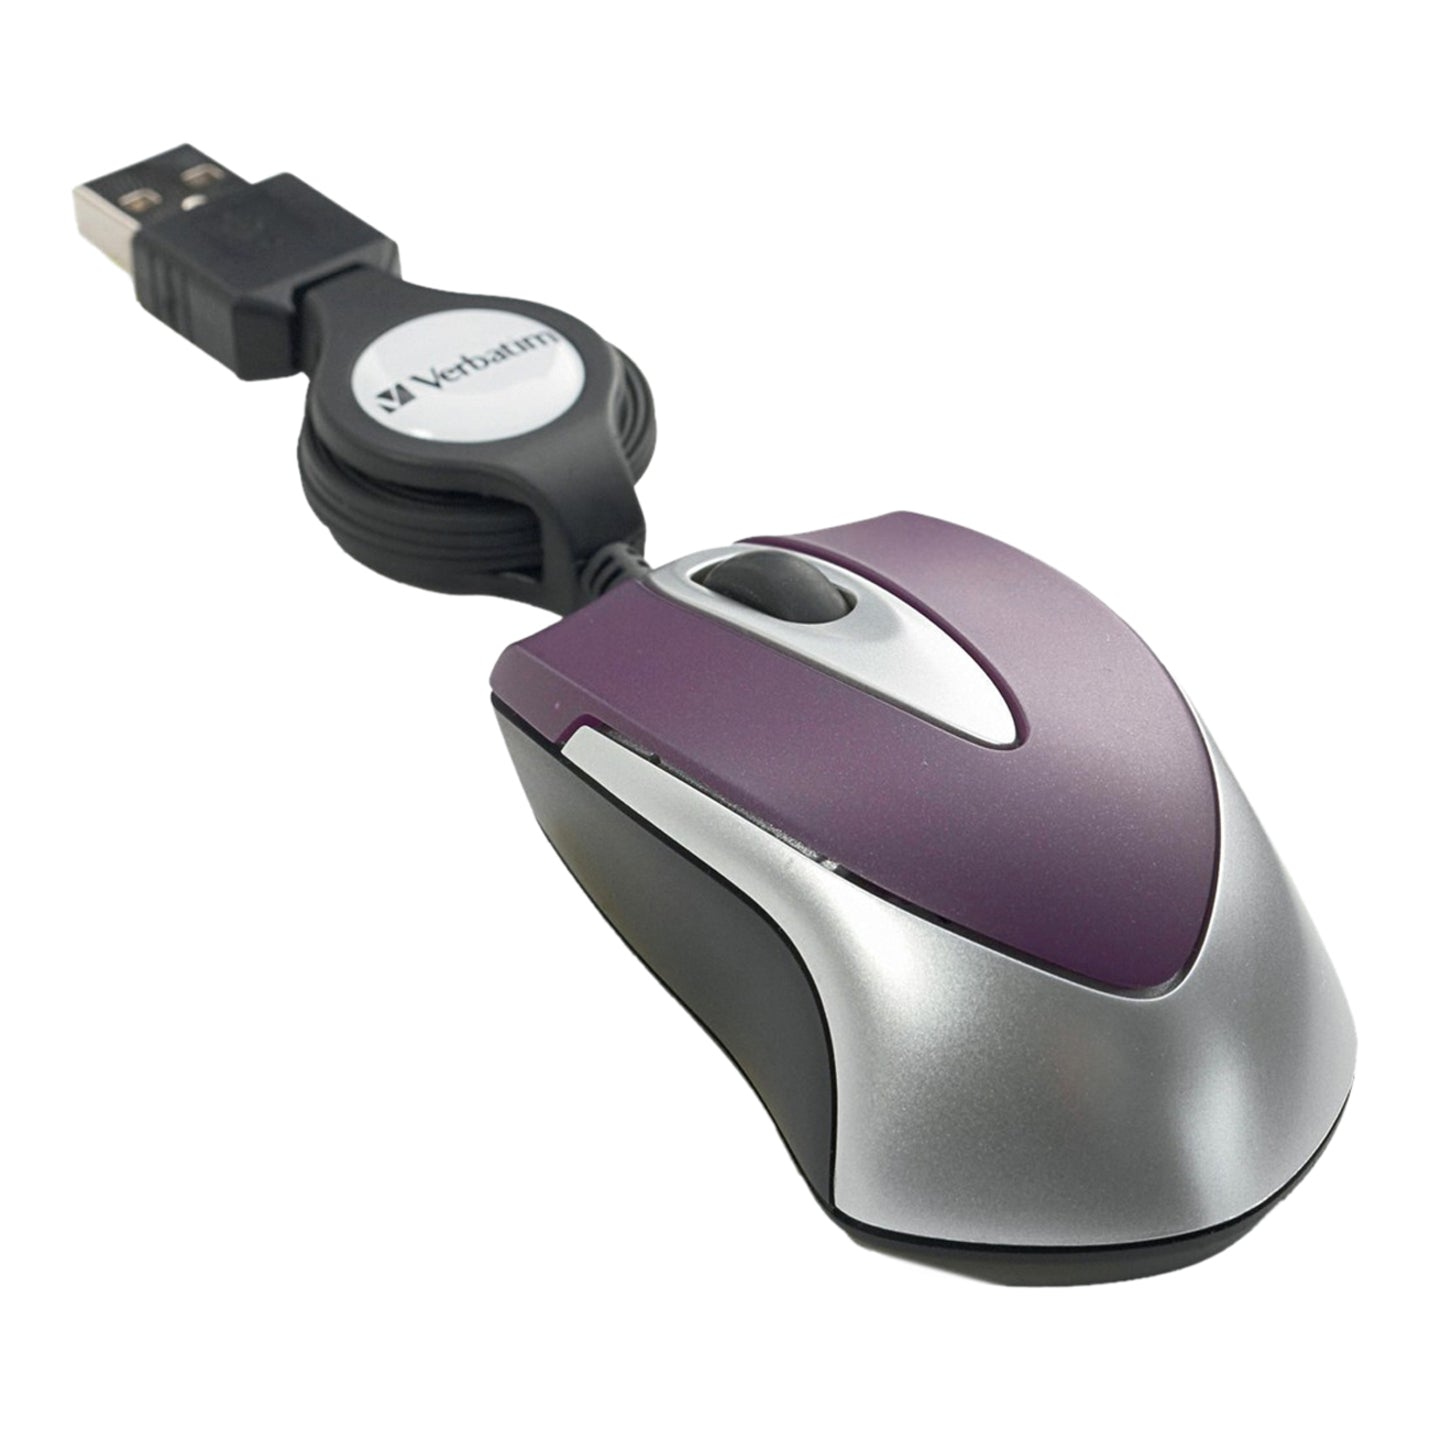 Verbatim 97253 Optical Travel Mouse, Purple, USB 2.0, 1000 dpi